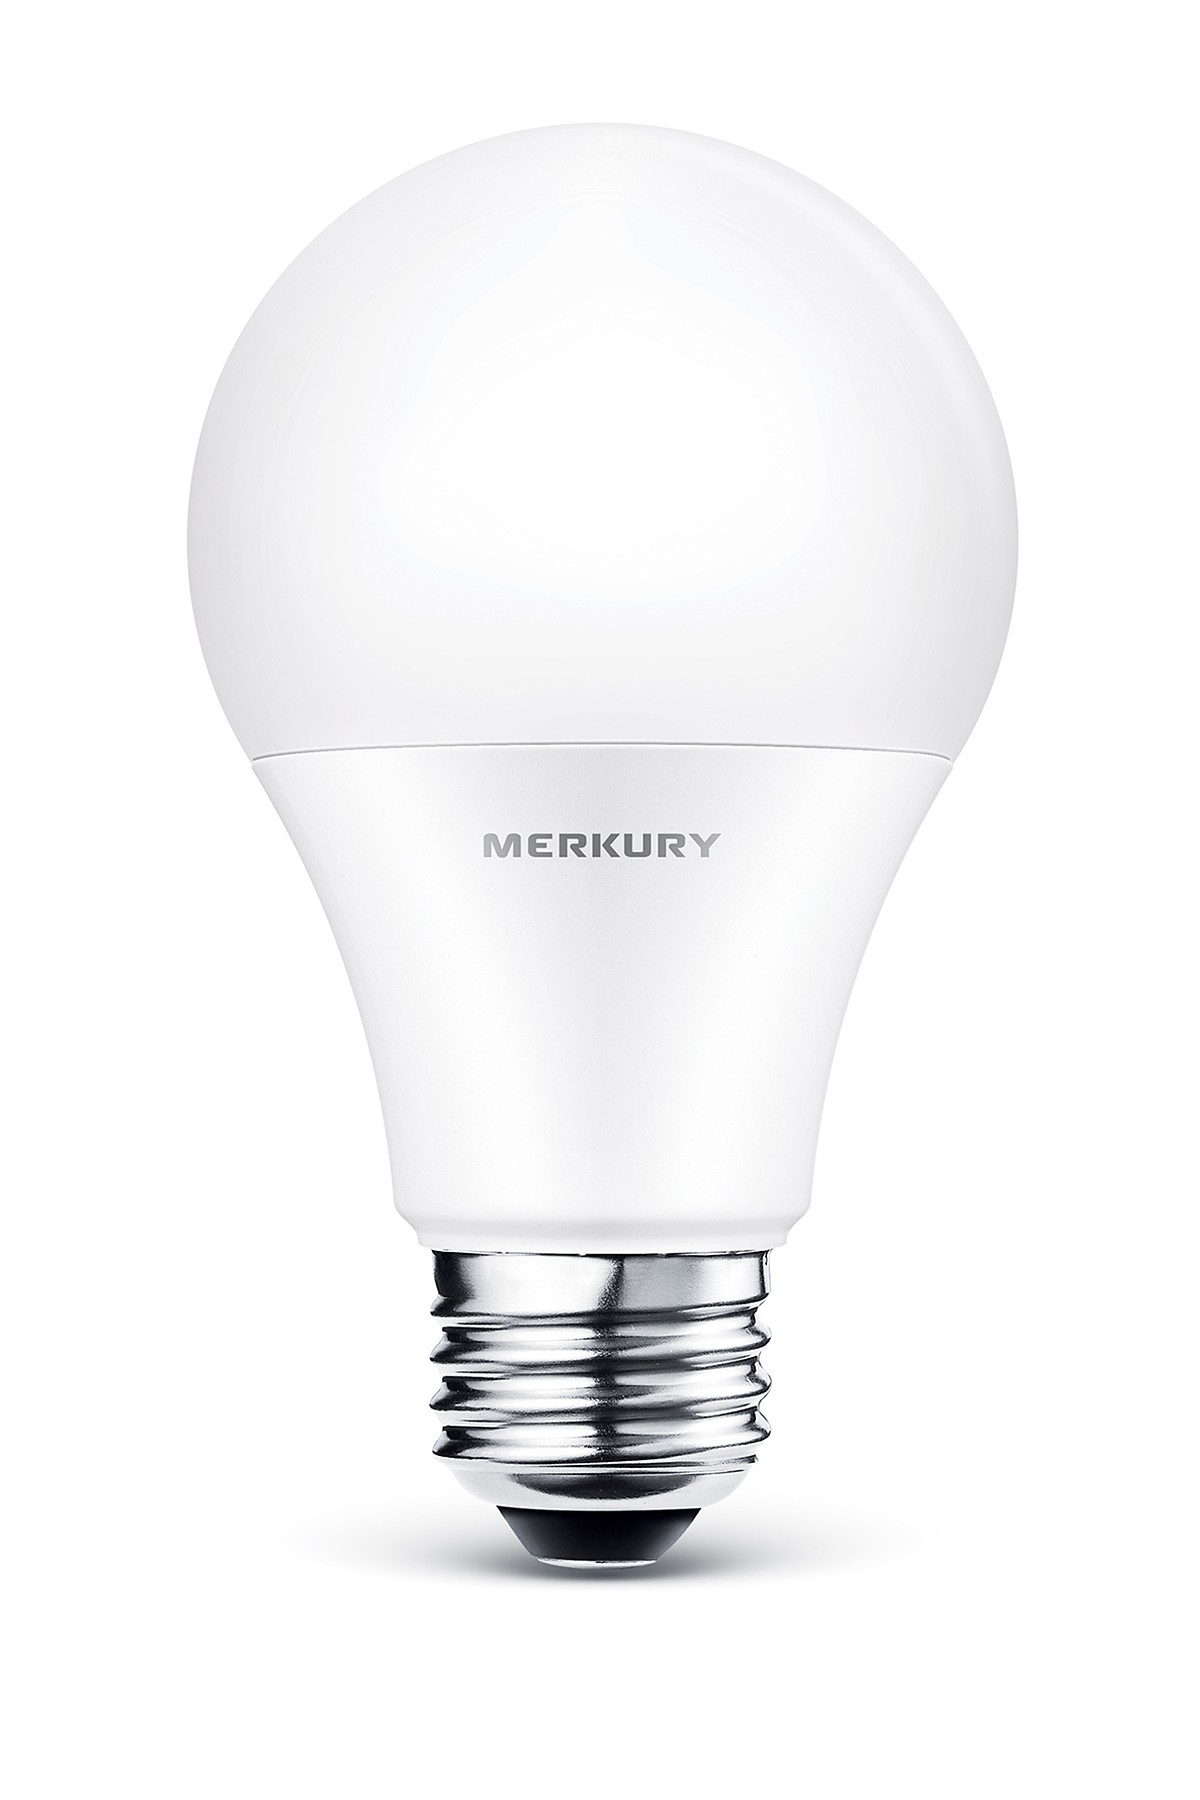 Merkury Innovations | BRIGHT 800 Smart Wi-Fi LED White Light Bulb ...